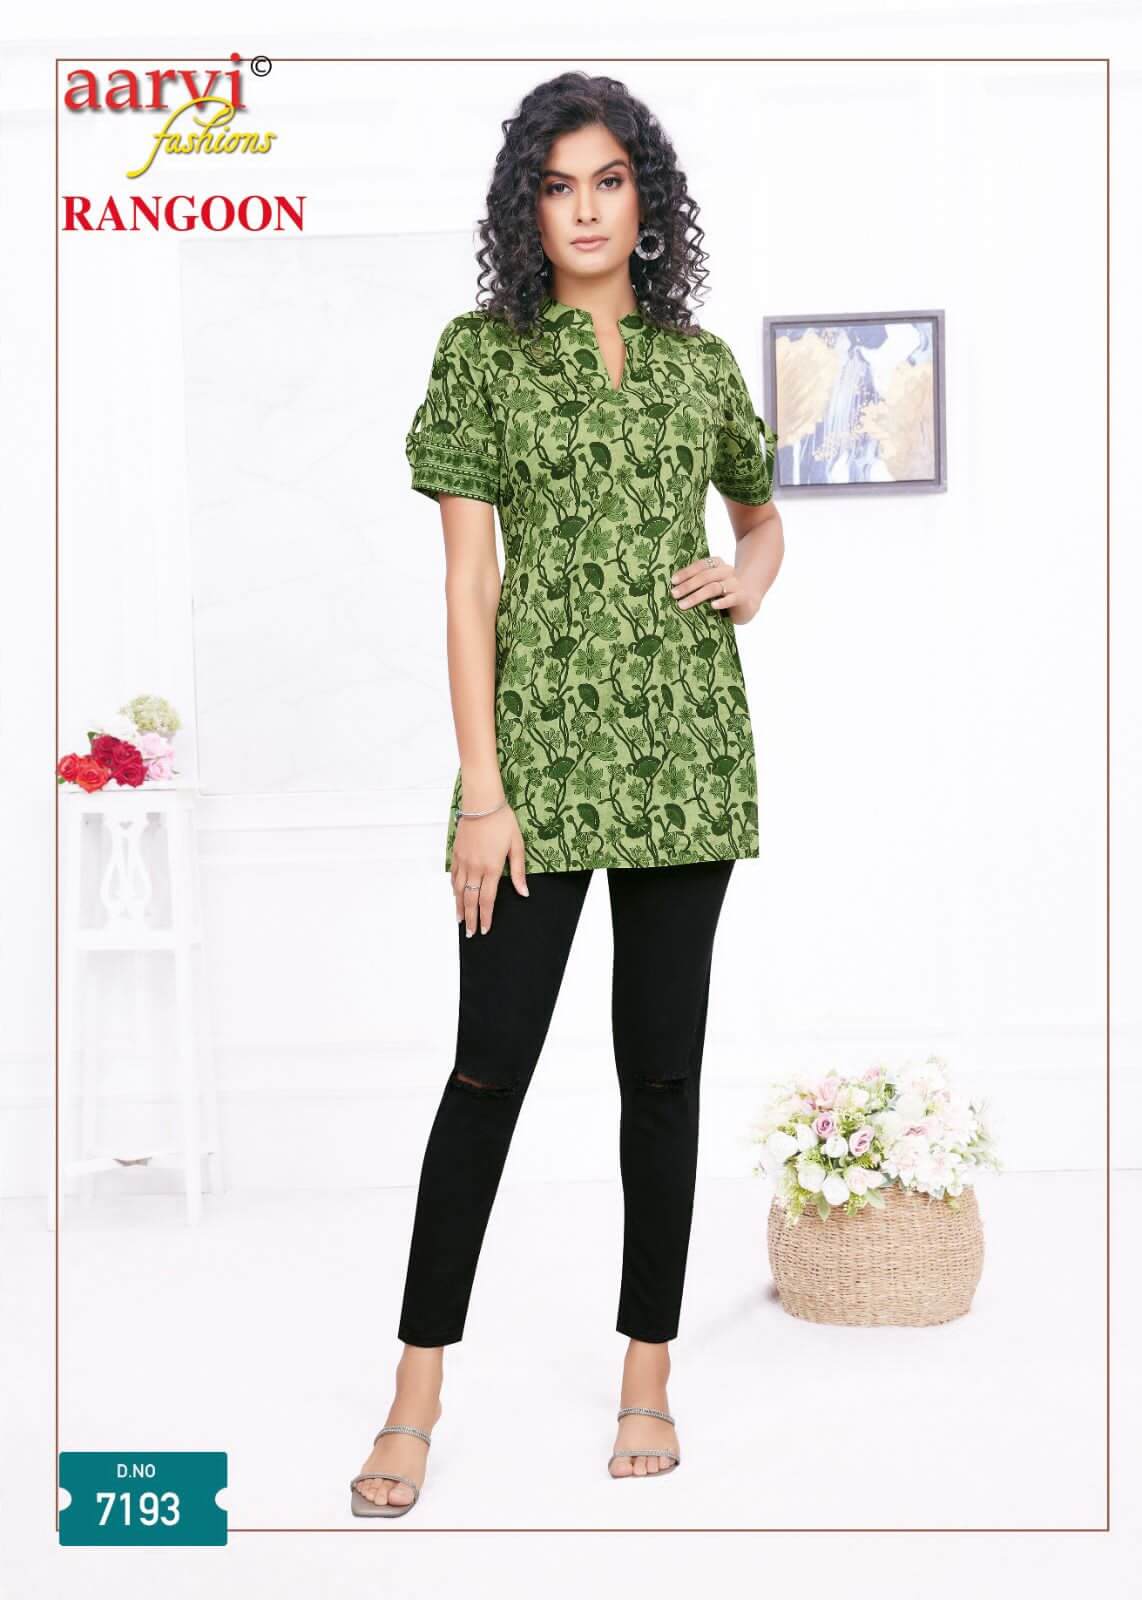 Aarvi Fashions Rangoon Ladies Short Tops Catalog collection 14